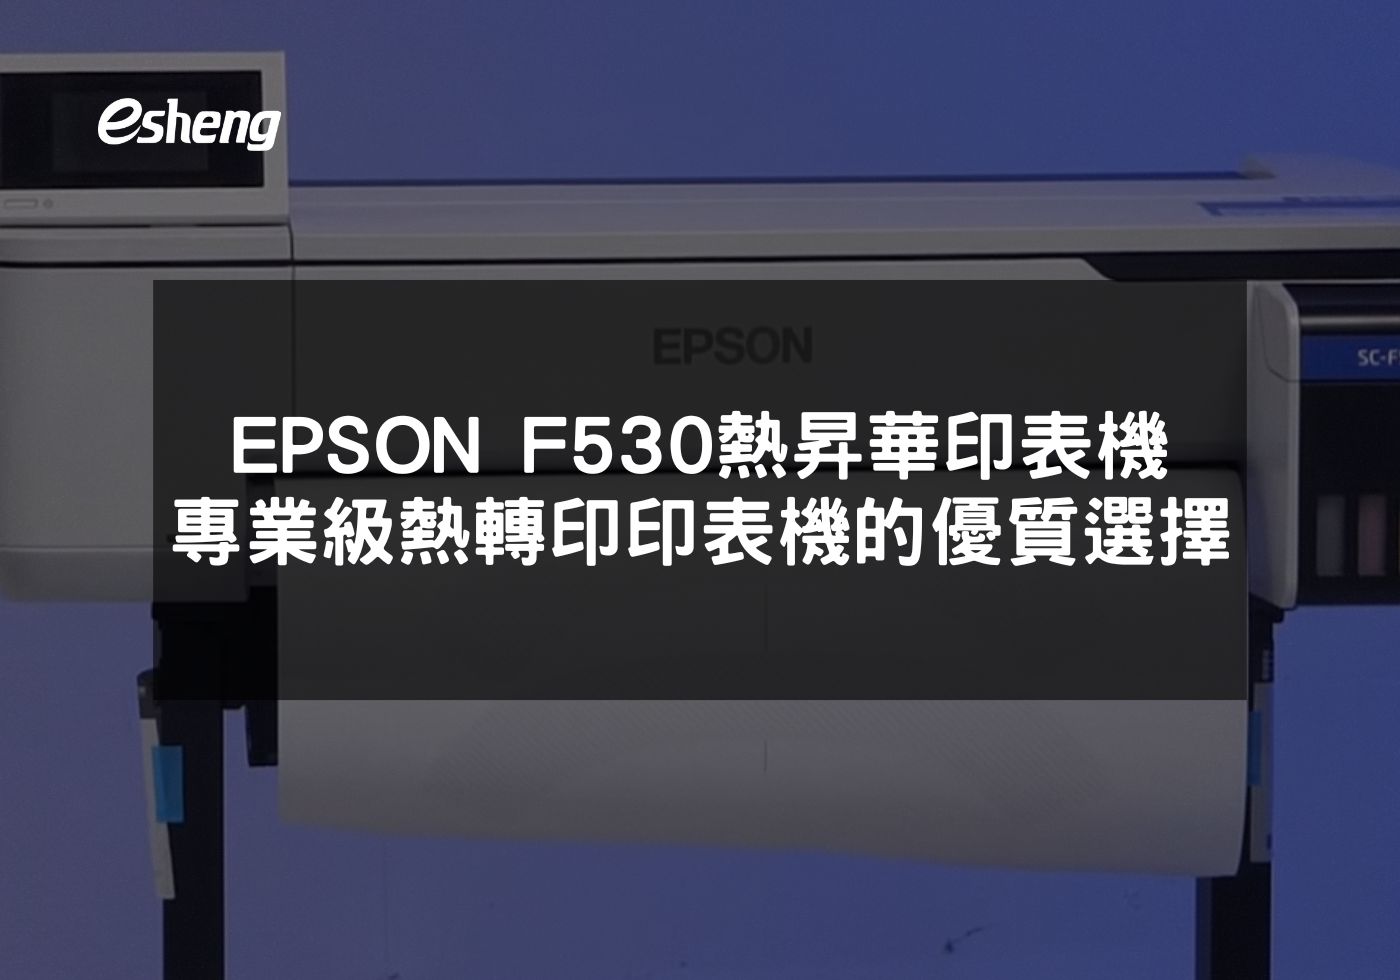 EPSON F530 熱昇華印表機 專業級熱轉印印表機的優質選擇